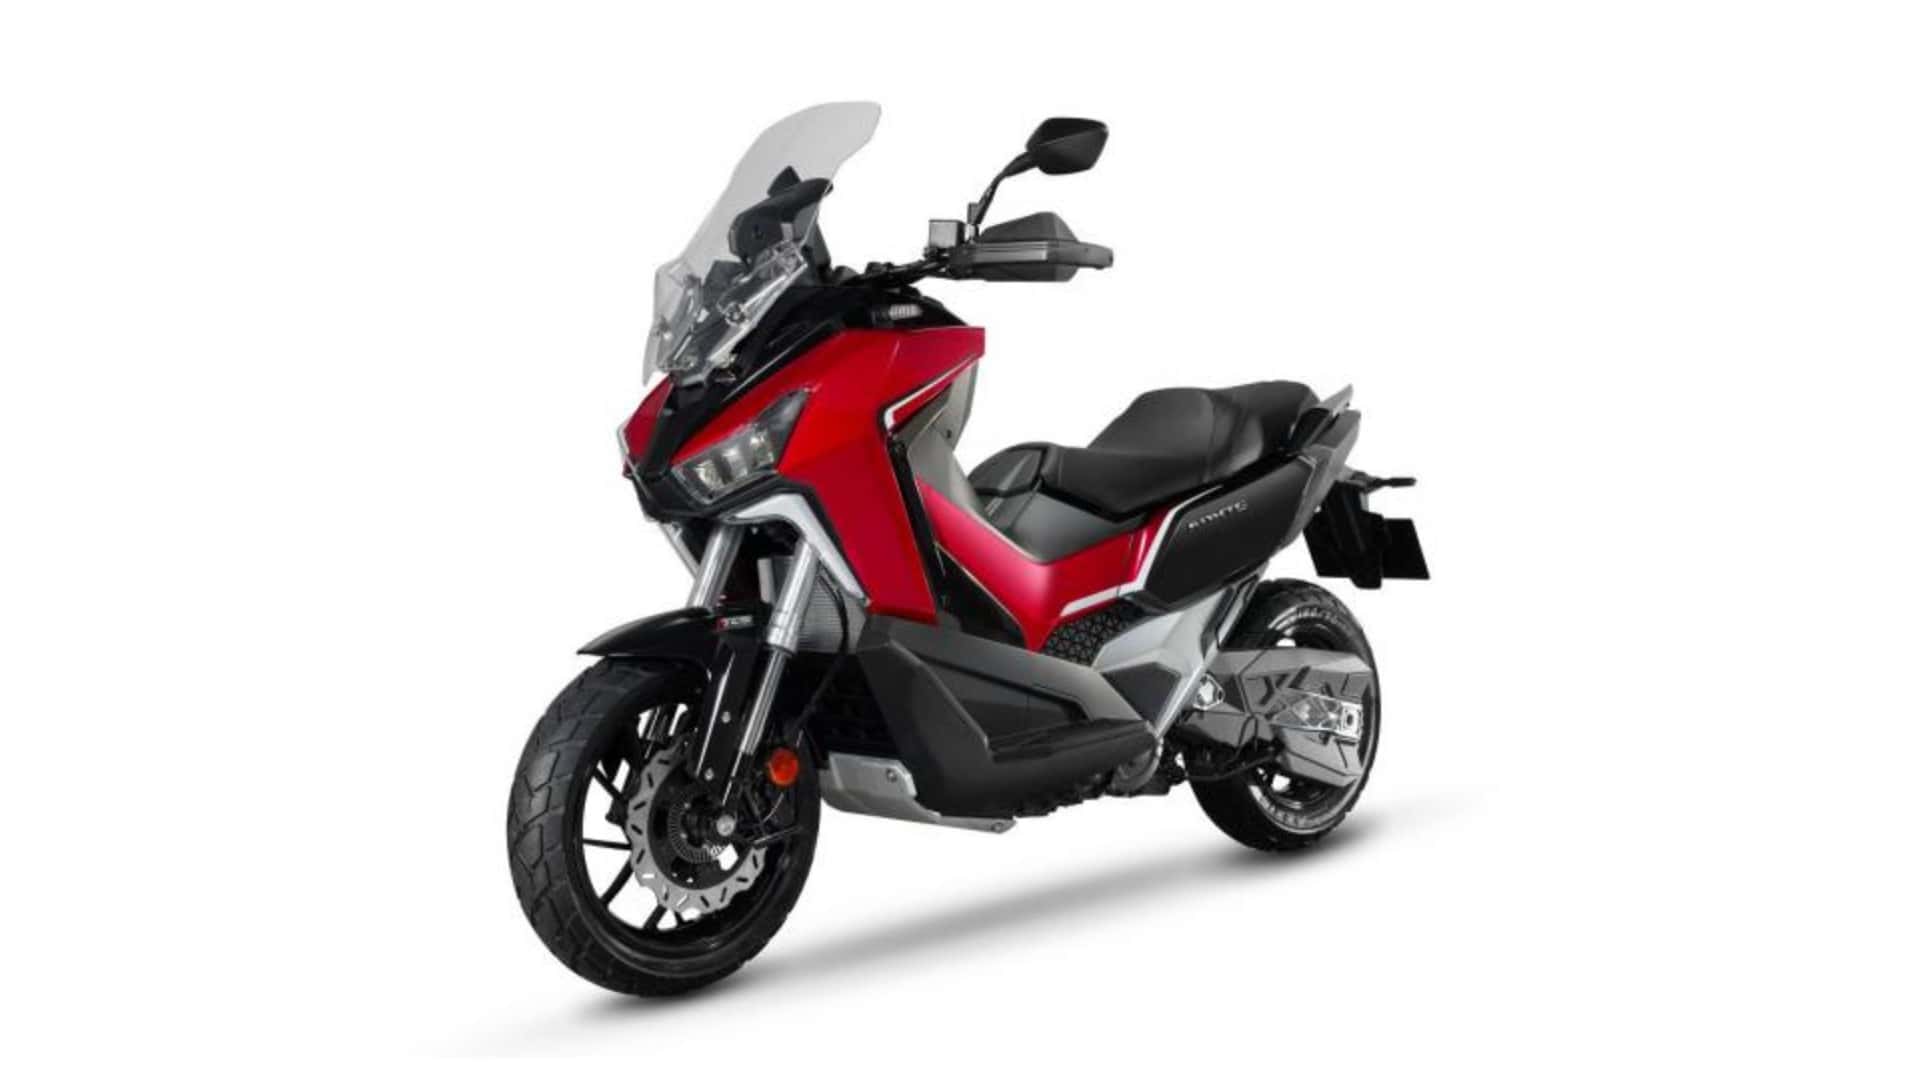 SYM ADXTG 400 – scooter de aventura robusta